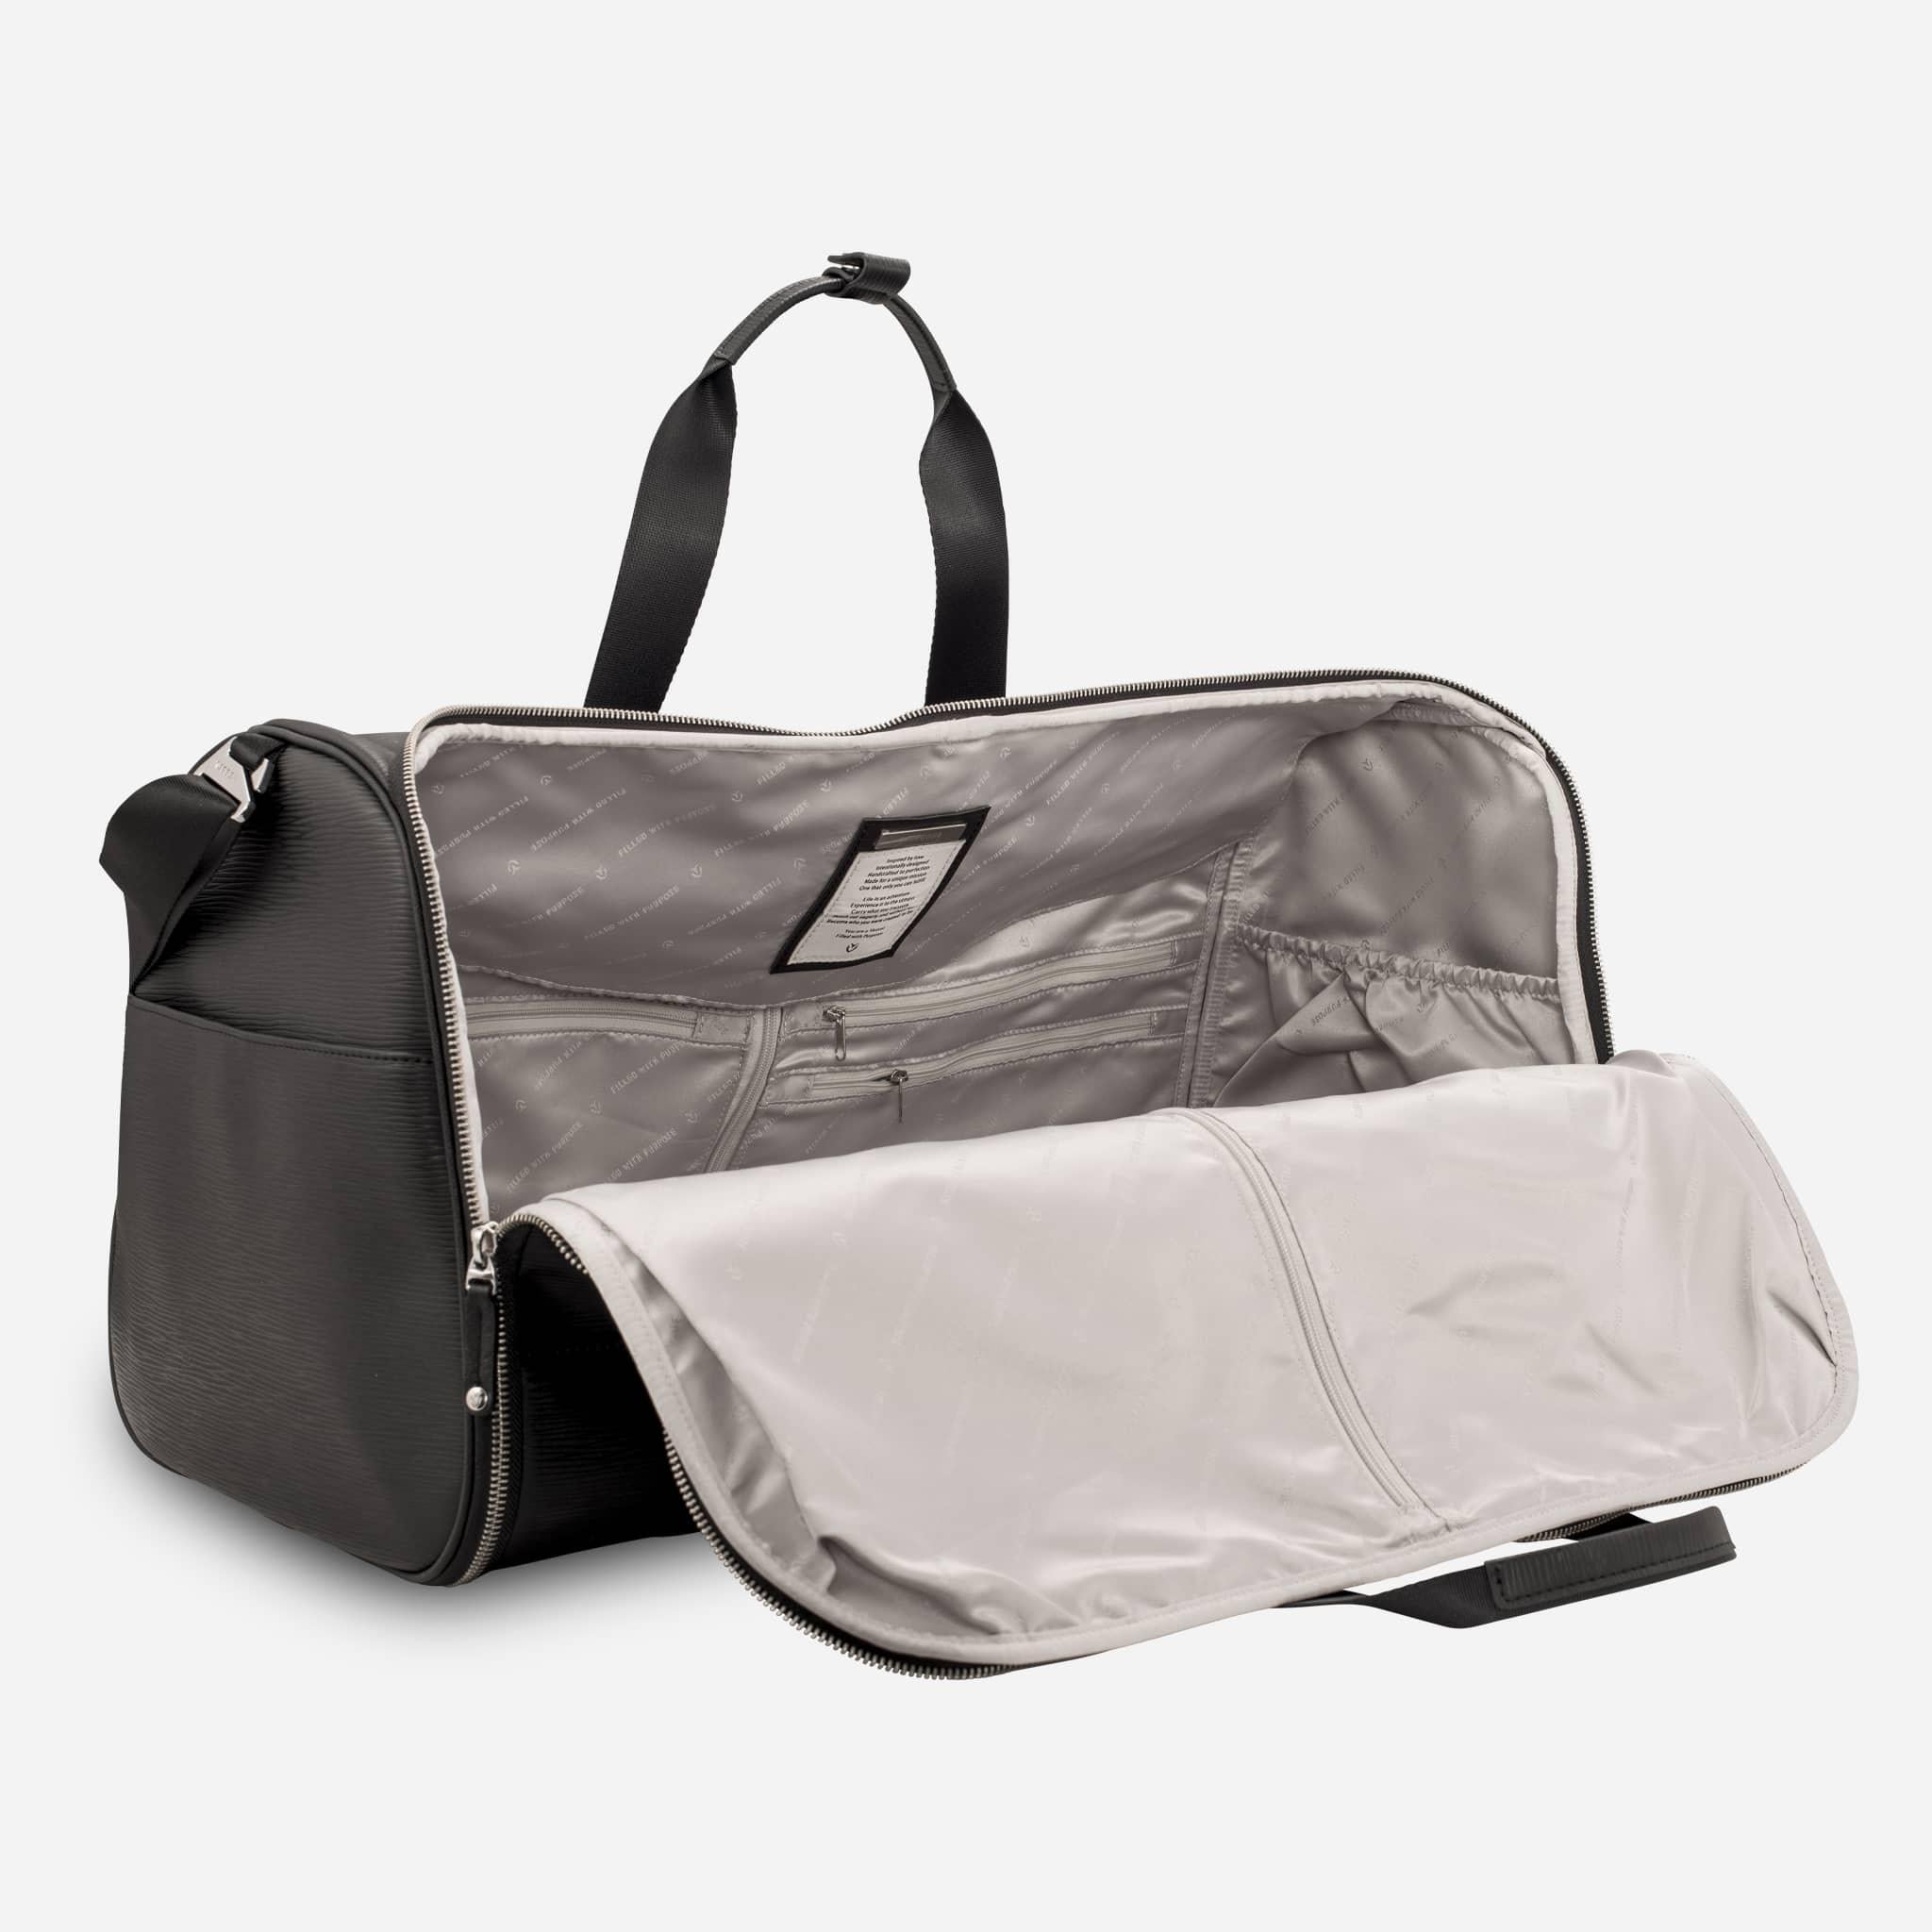 Signature Garment Duffel Bag, Leather Garment Duffel Bag